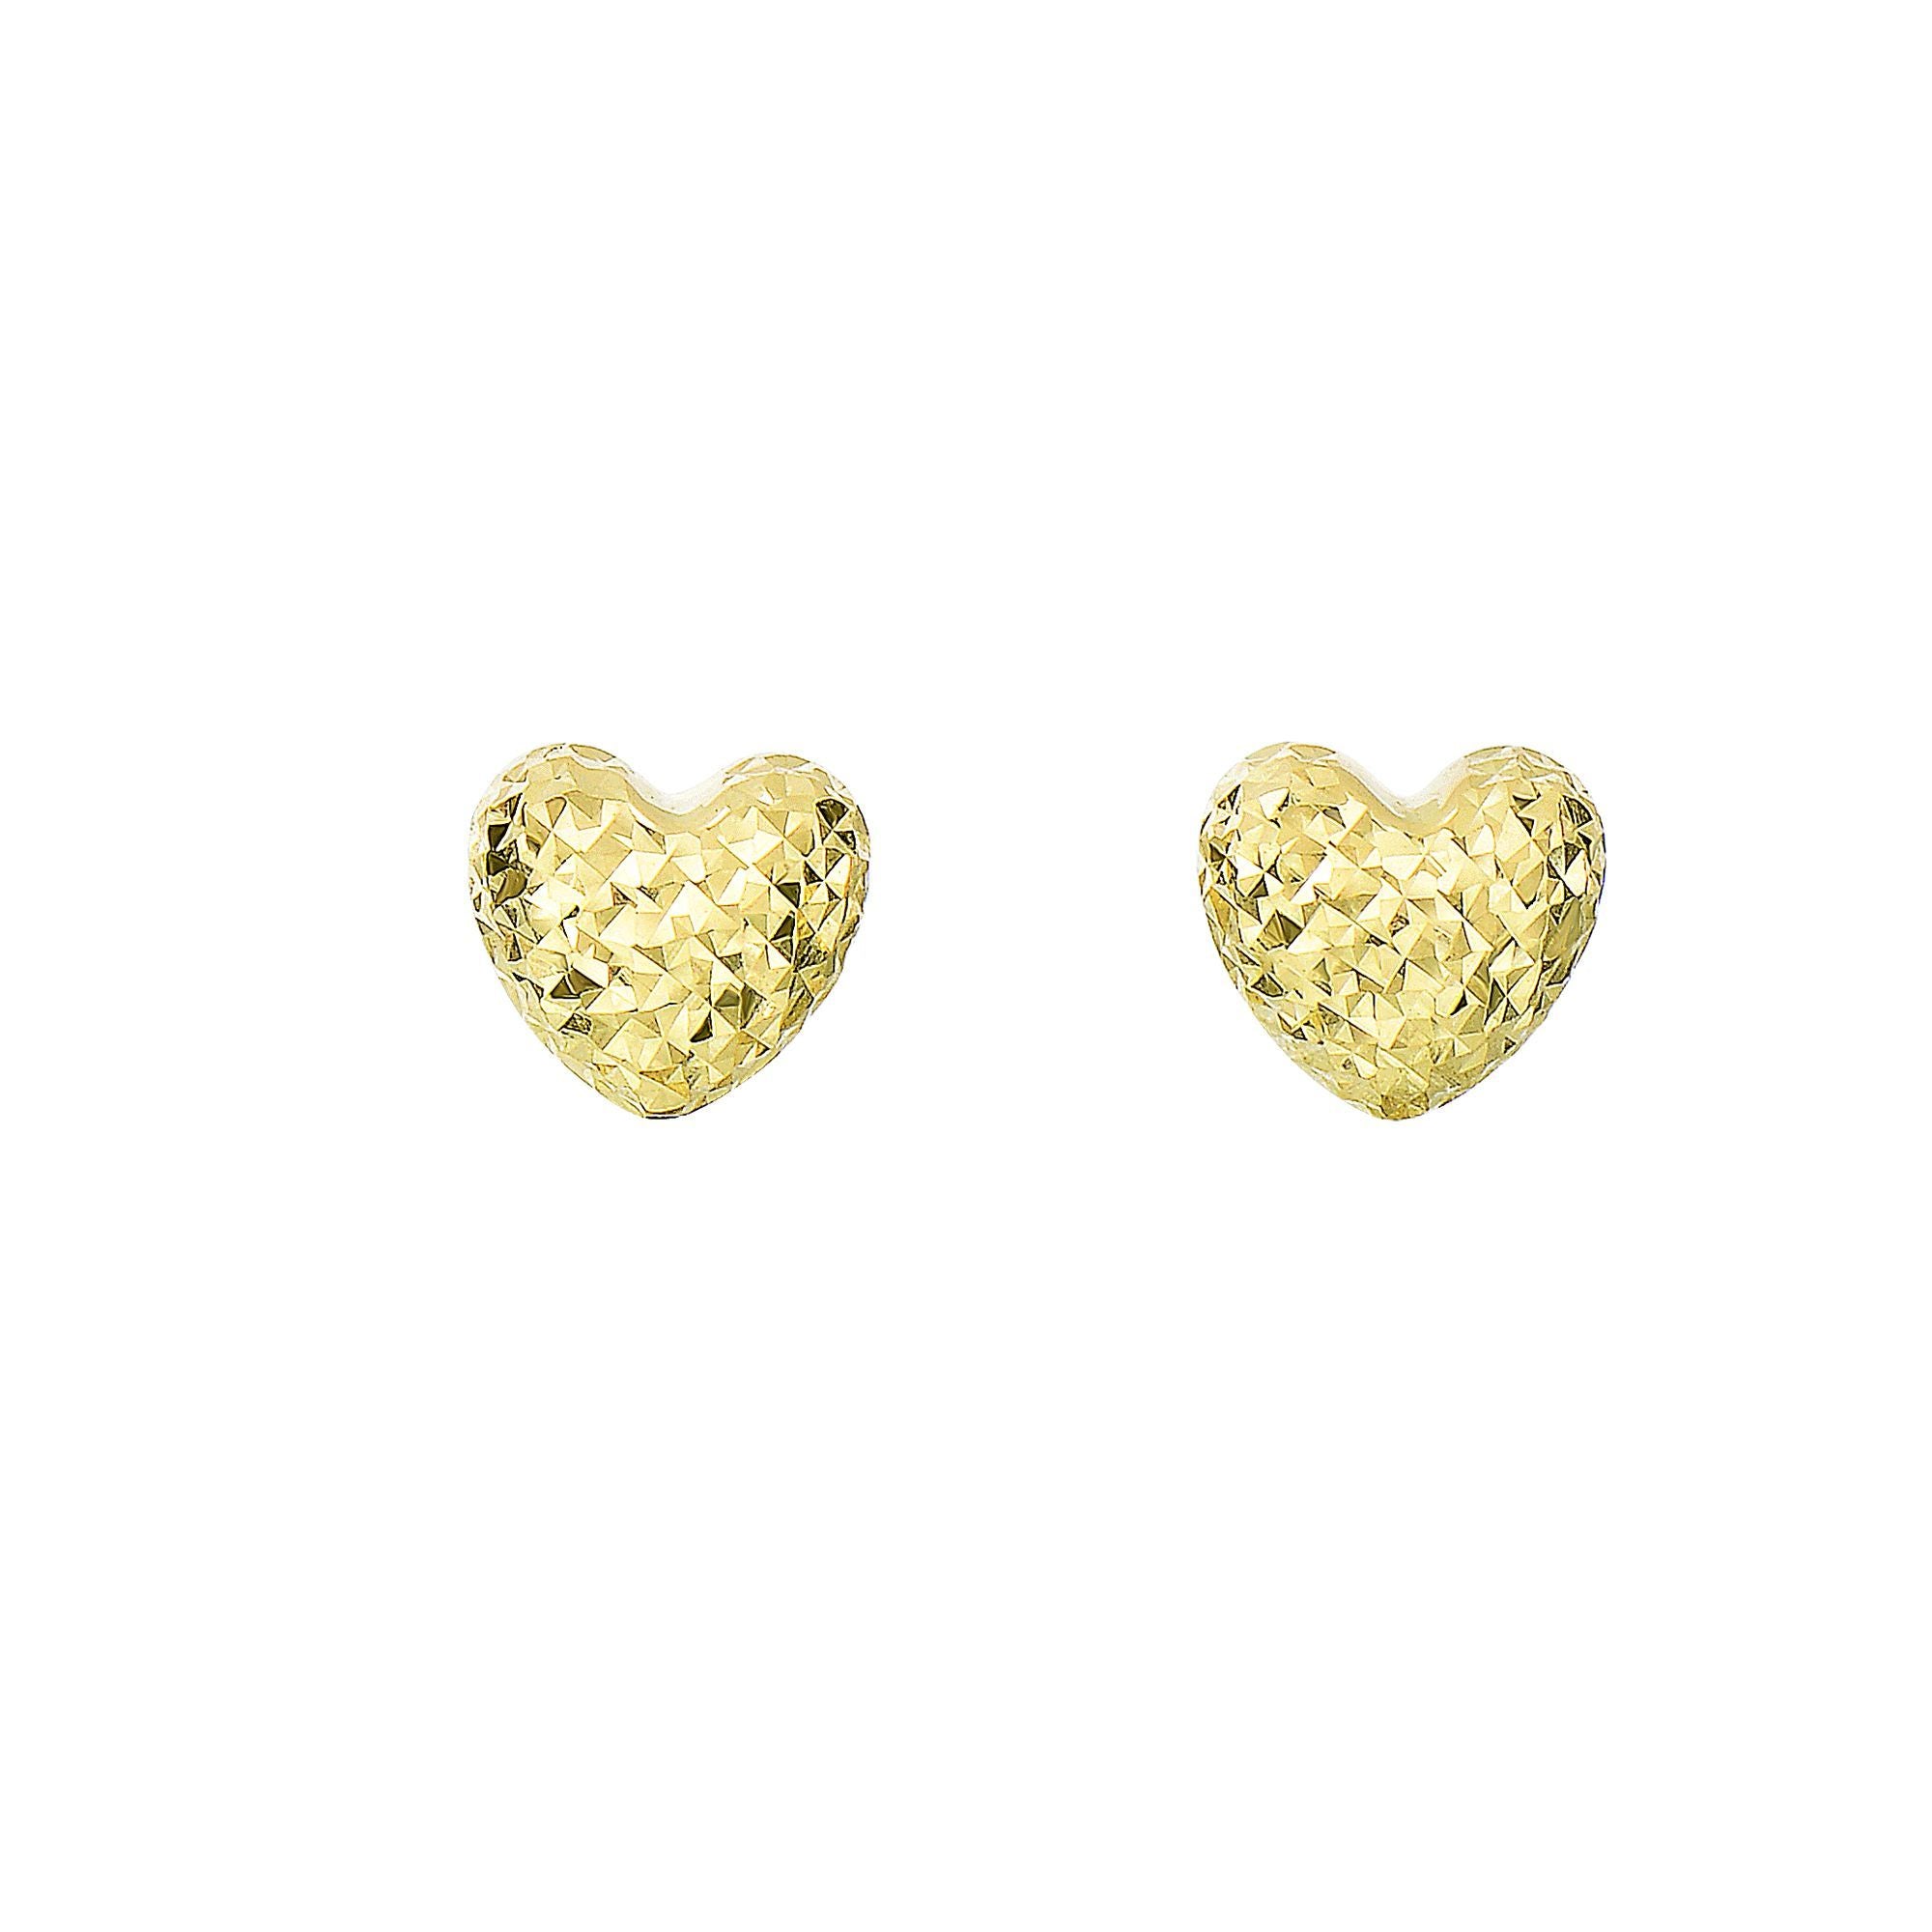 Minimalist Solid Gold Shiny and Diamond Cut Puff Heart Fancy Post Earrings - wingroupjewelry